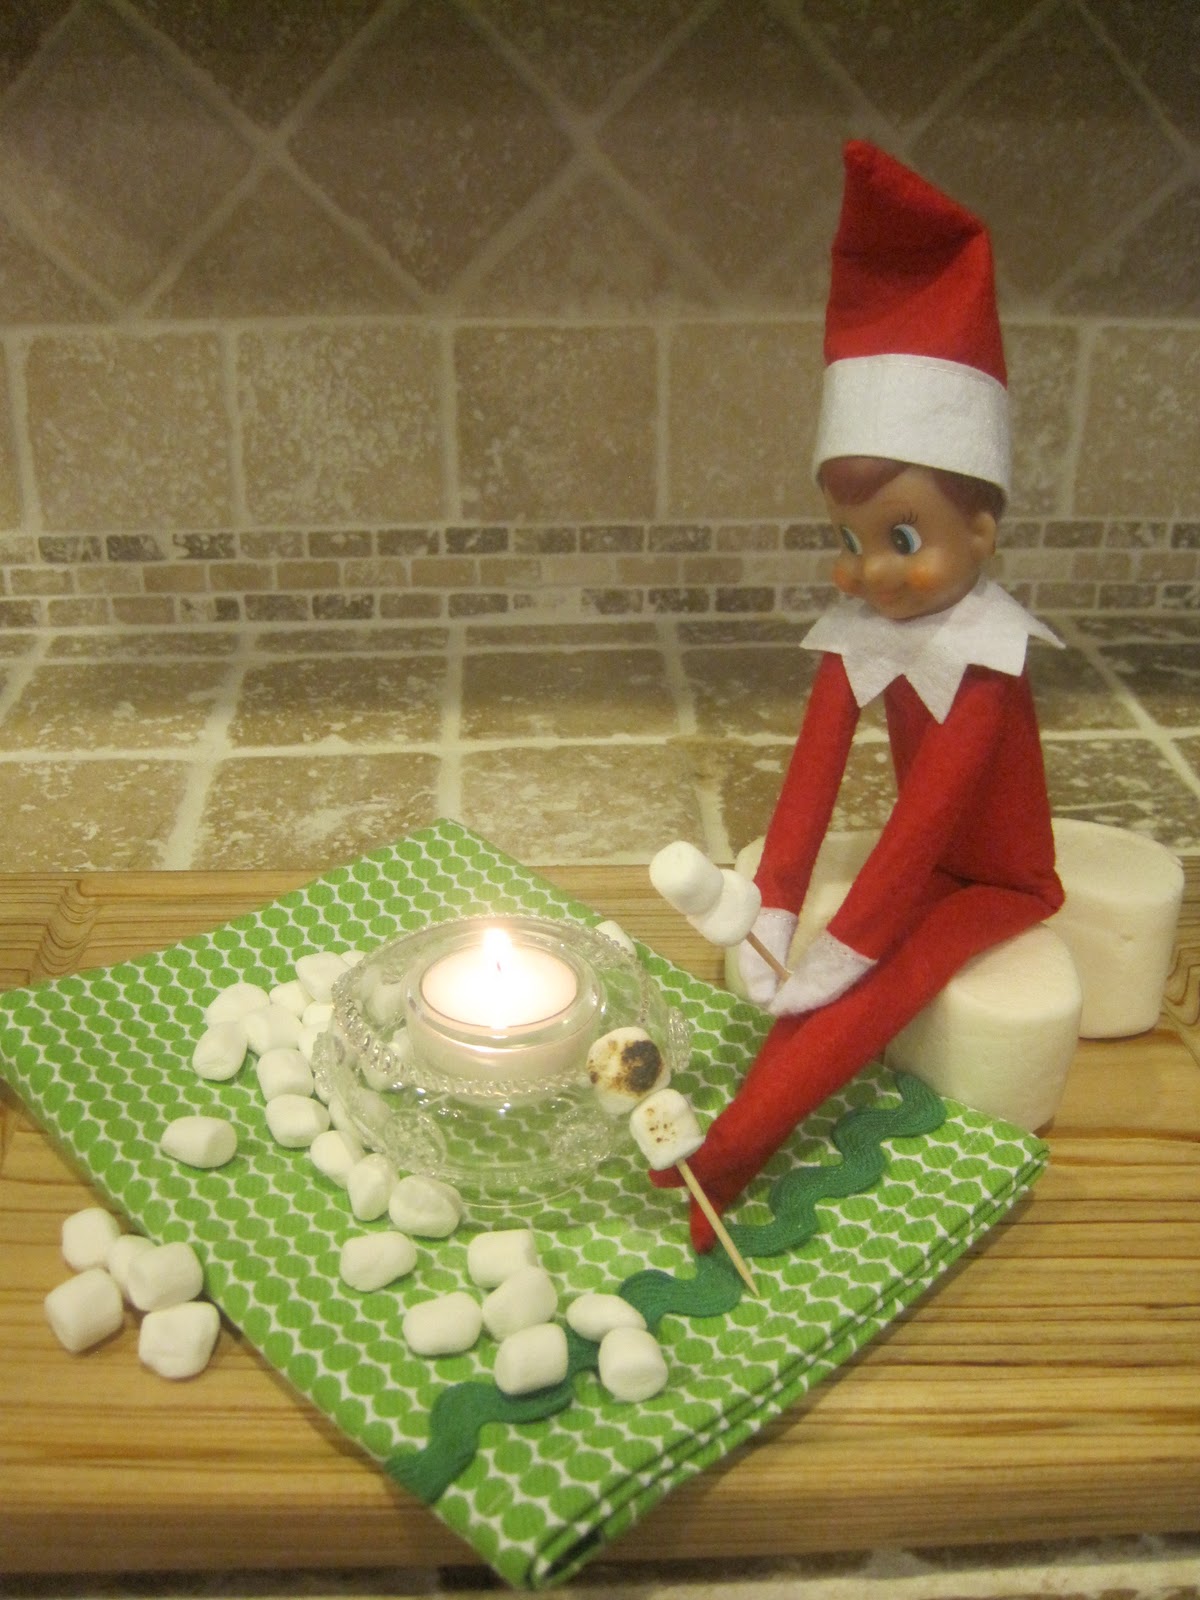 Teen Blog: Funny Elf on a Shelf photos